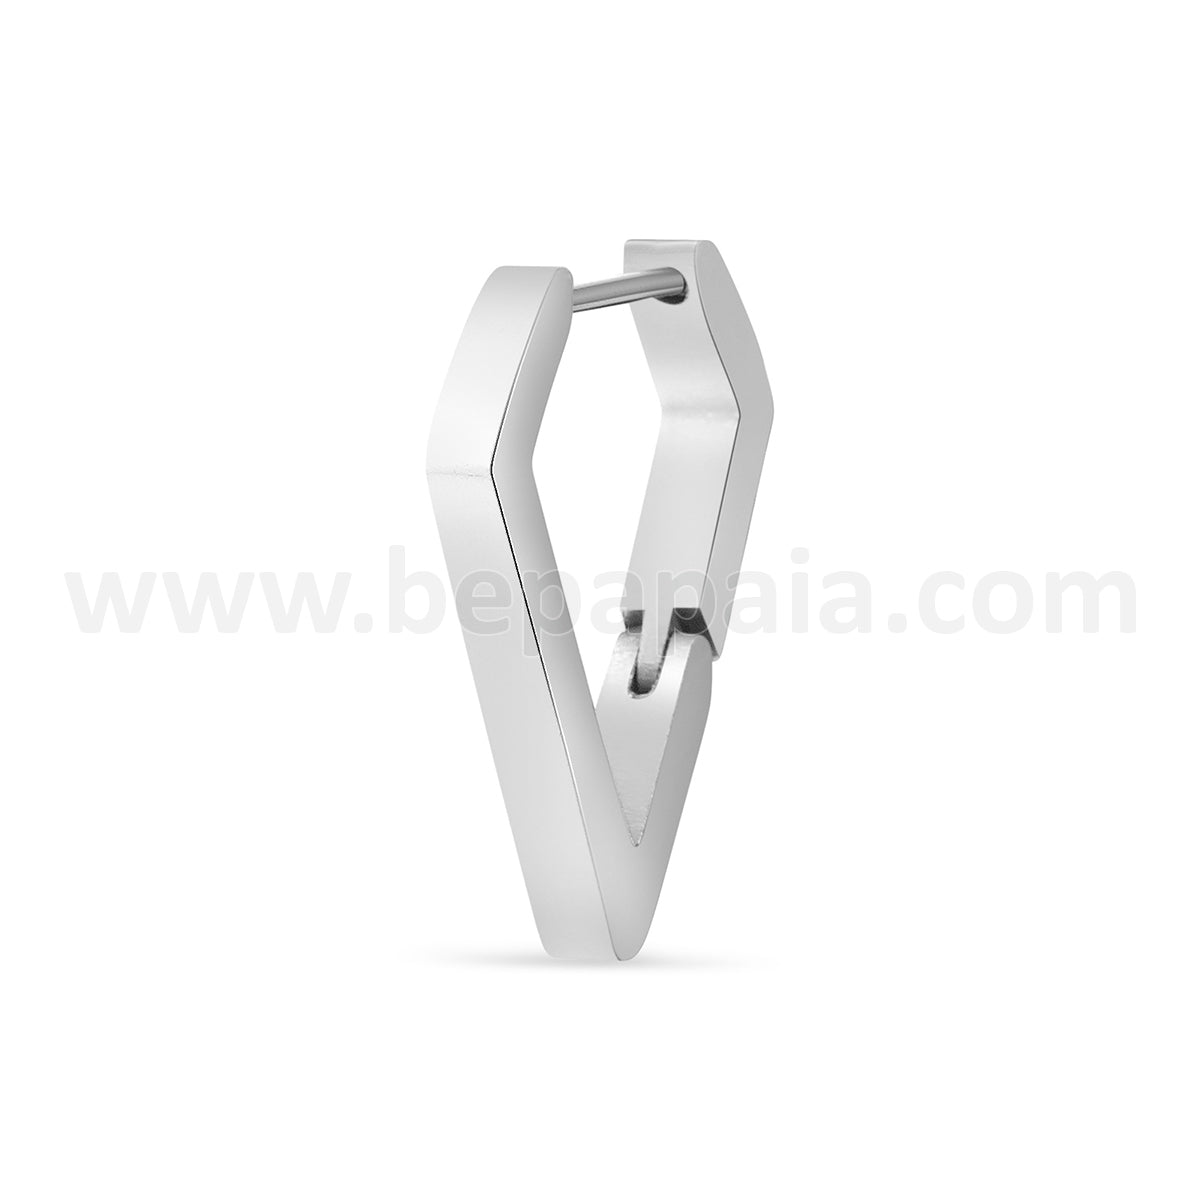 Stainless steel hoop earring diamond shape